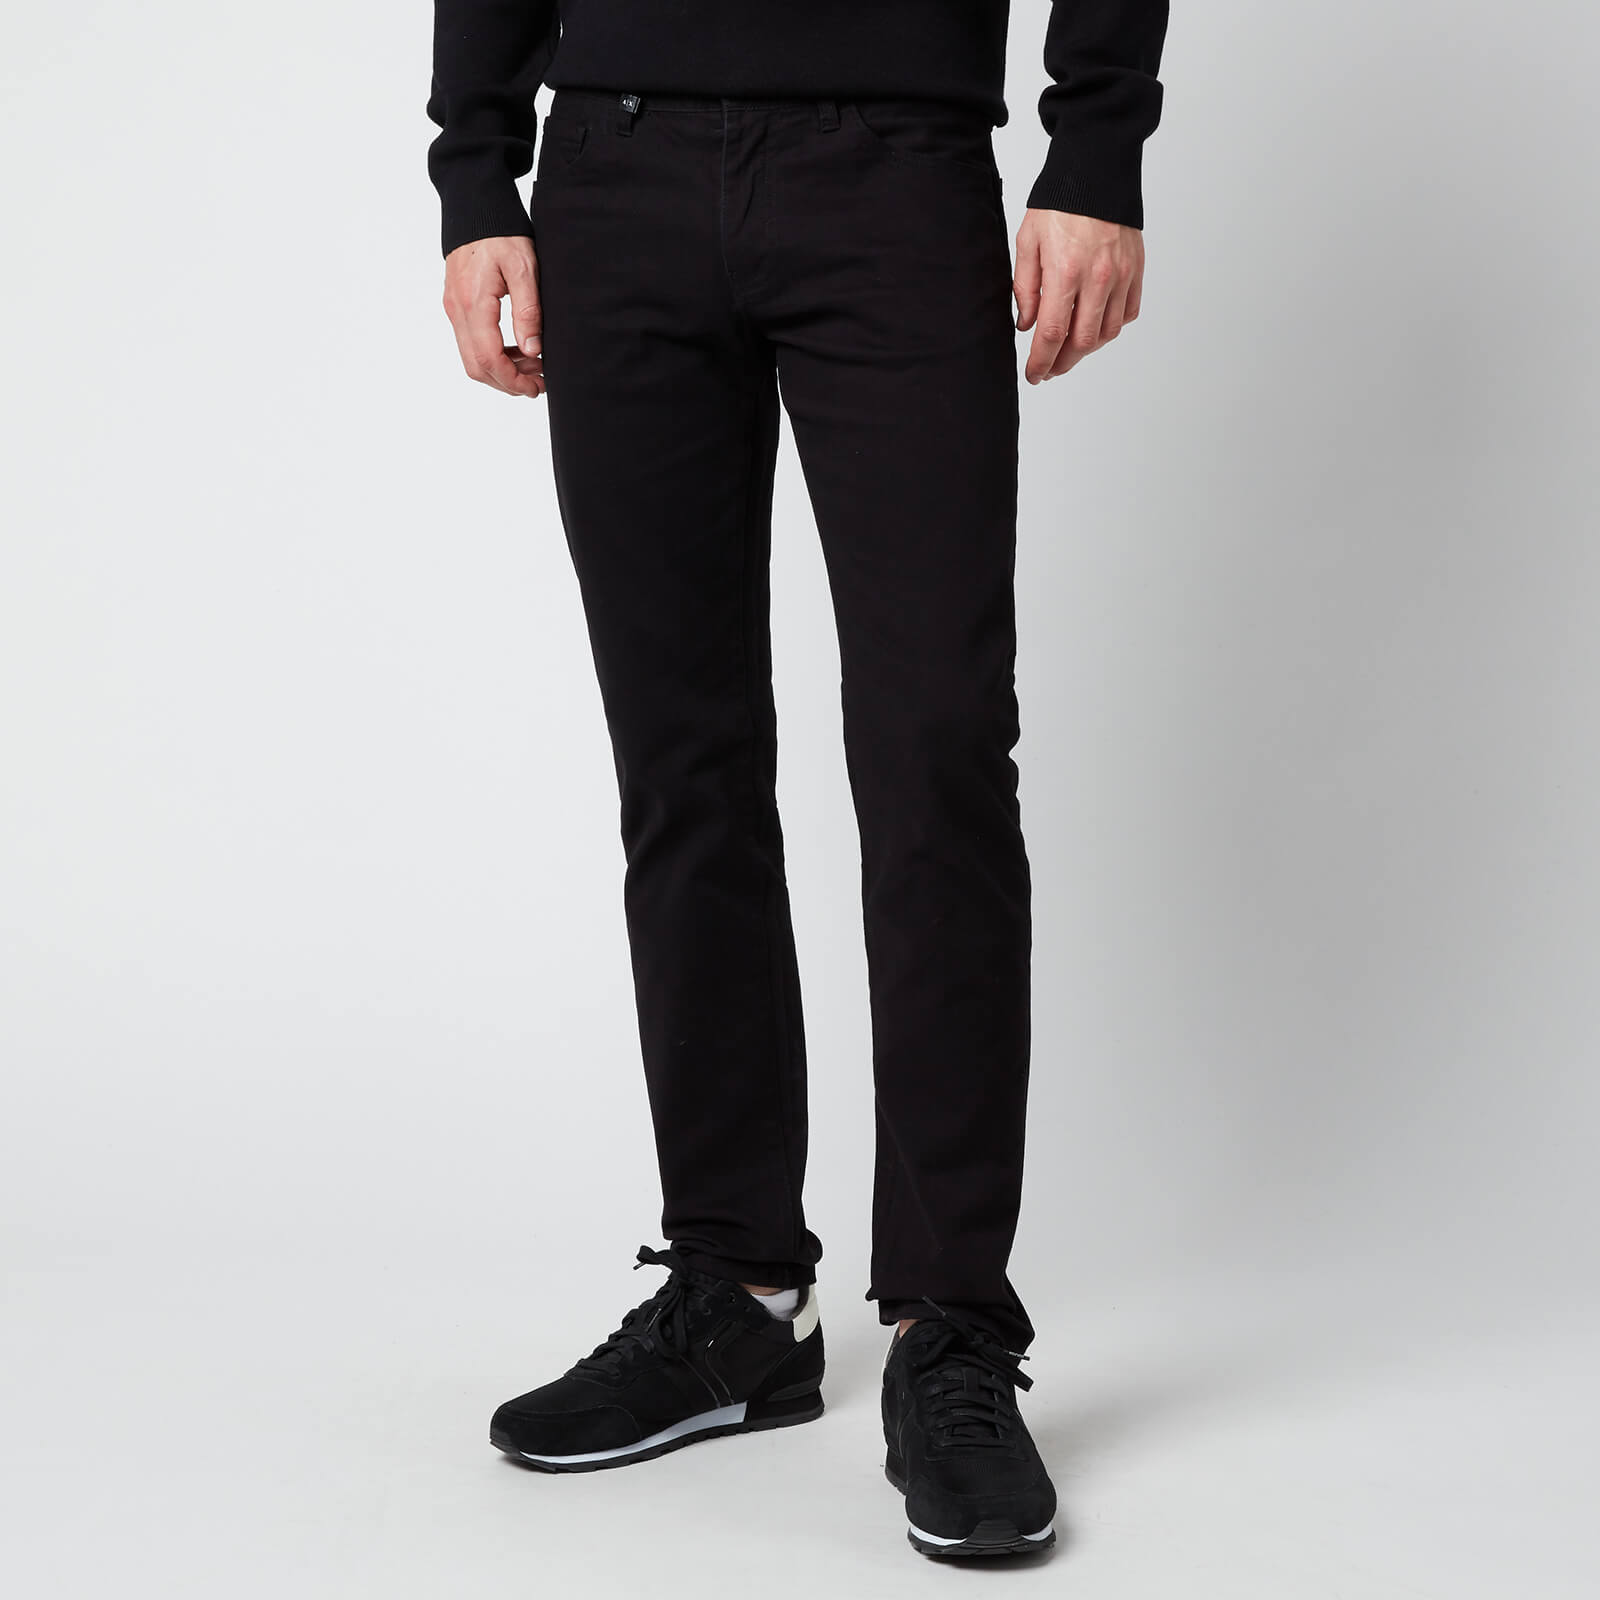 Armani Exchange Men's Slim Denim Jeans - Black - W30/L32